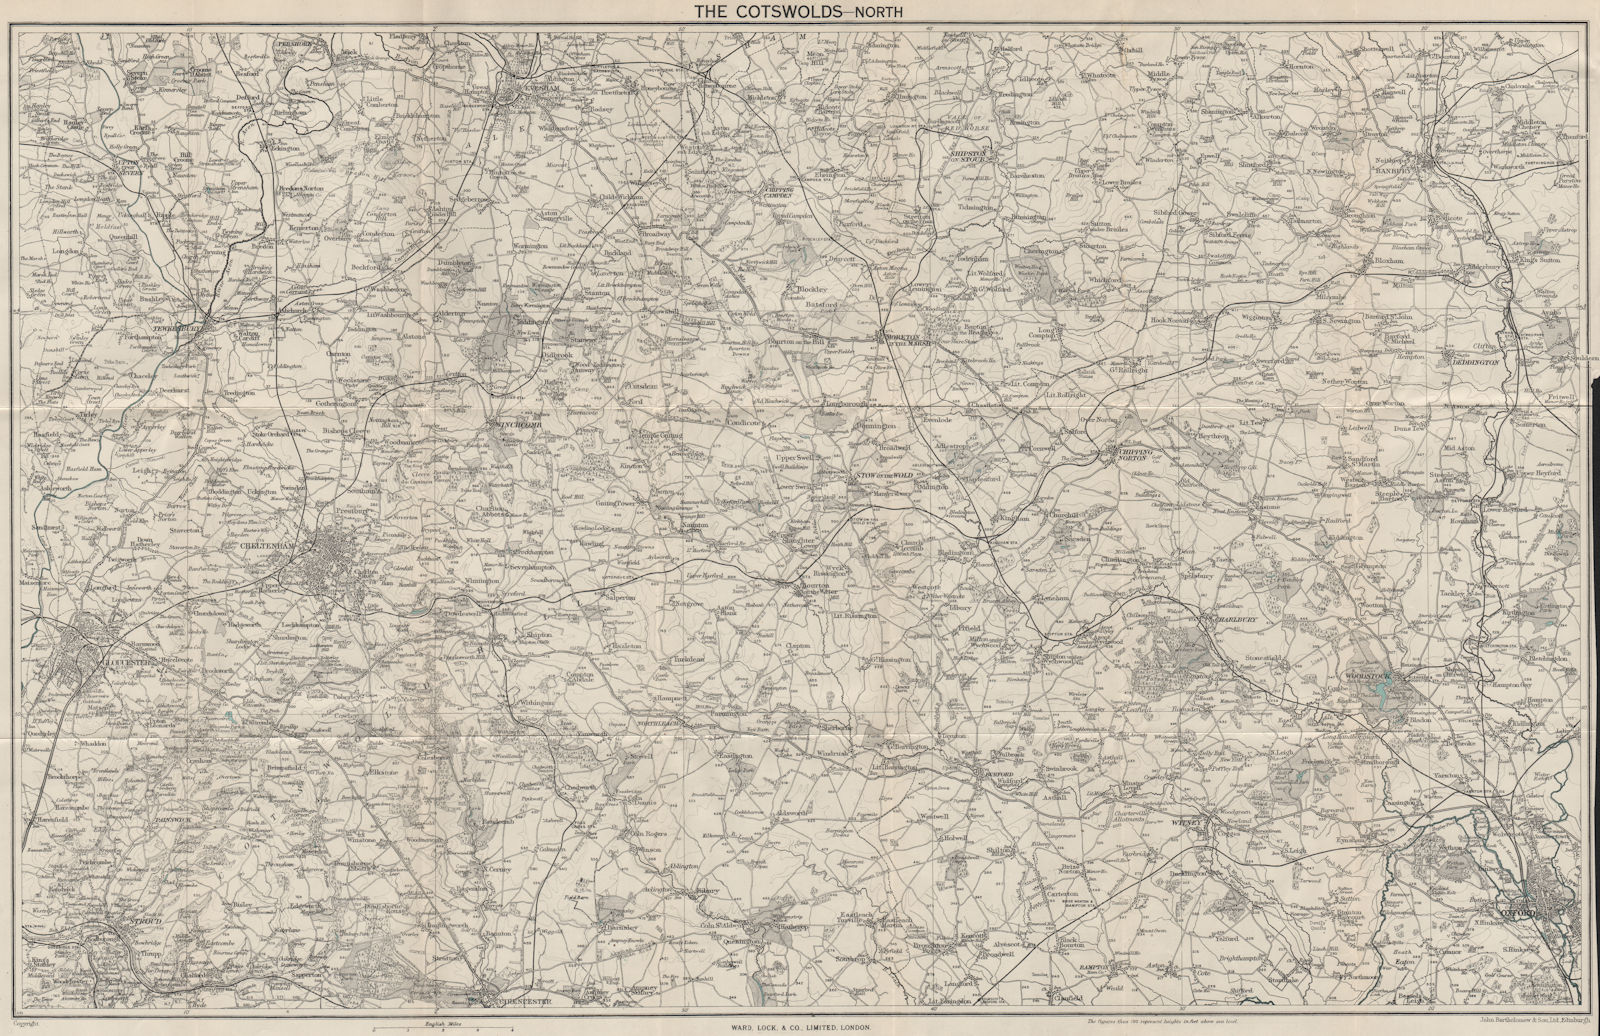 NORTH COTSWOLDS Gloucester Cheltenham Oxford Banbury. WARD LOCK 1948 map